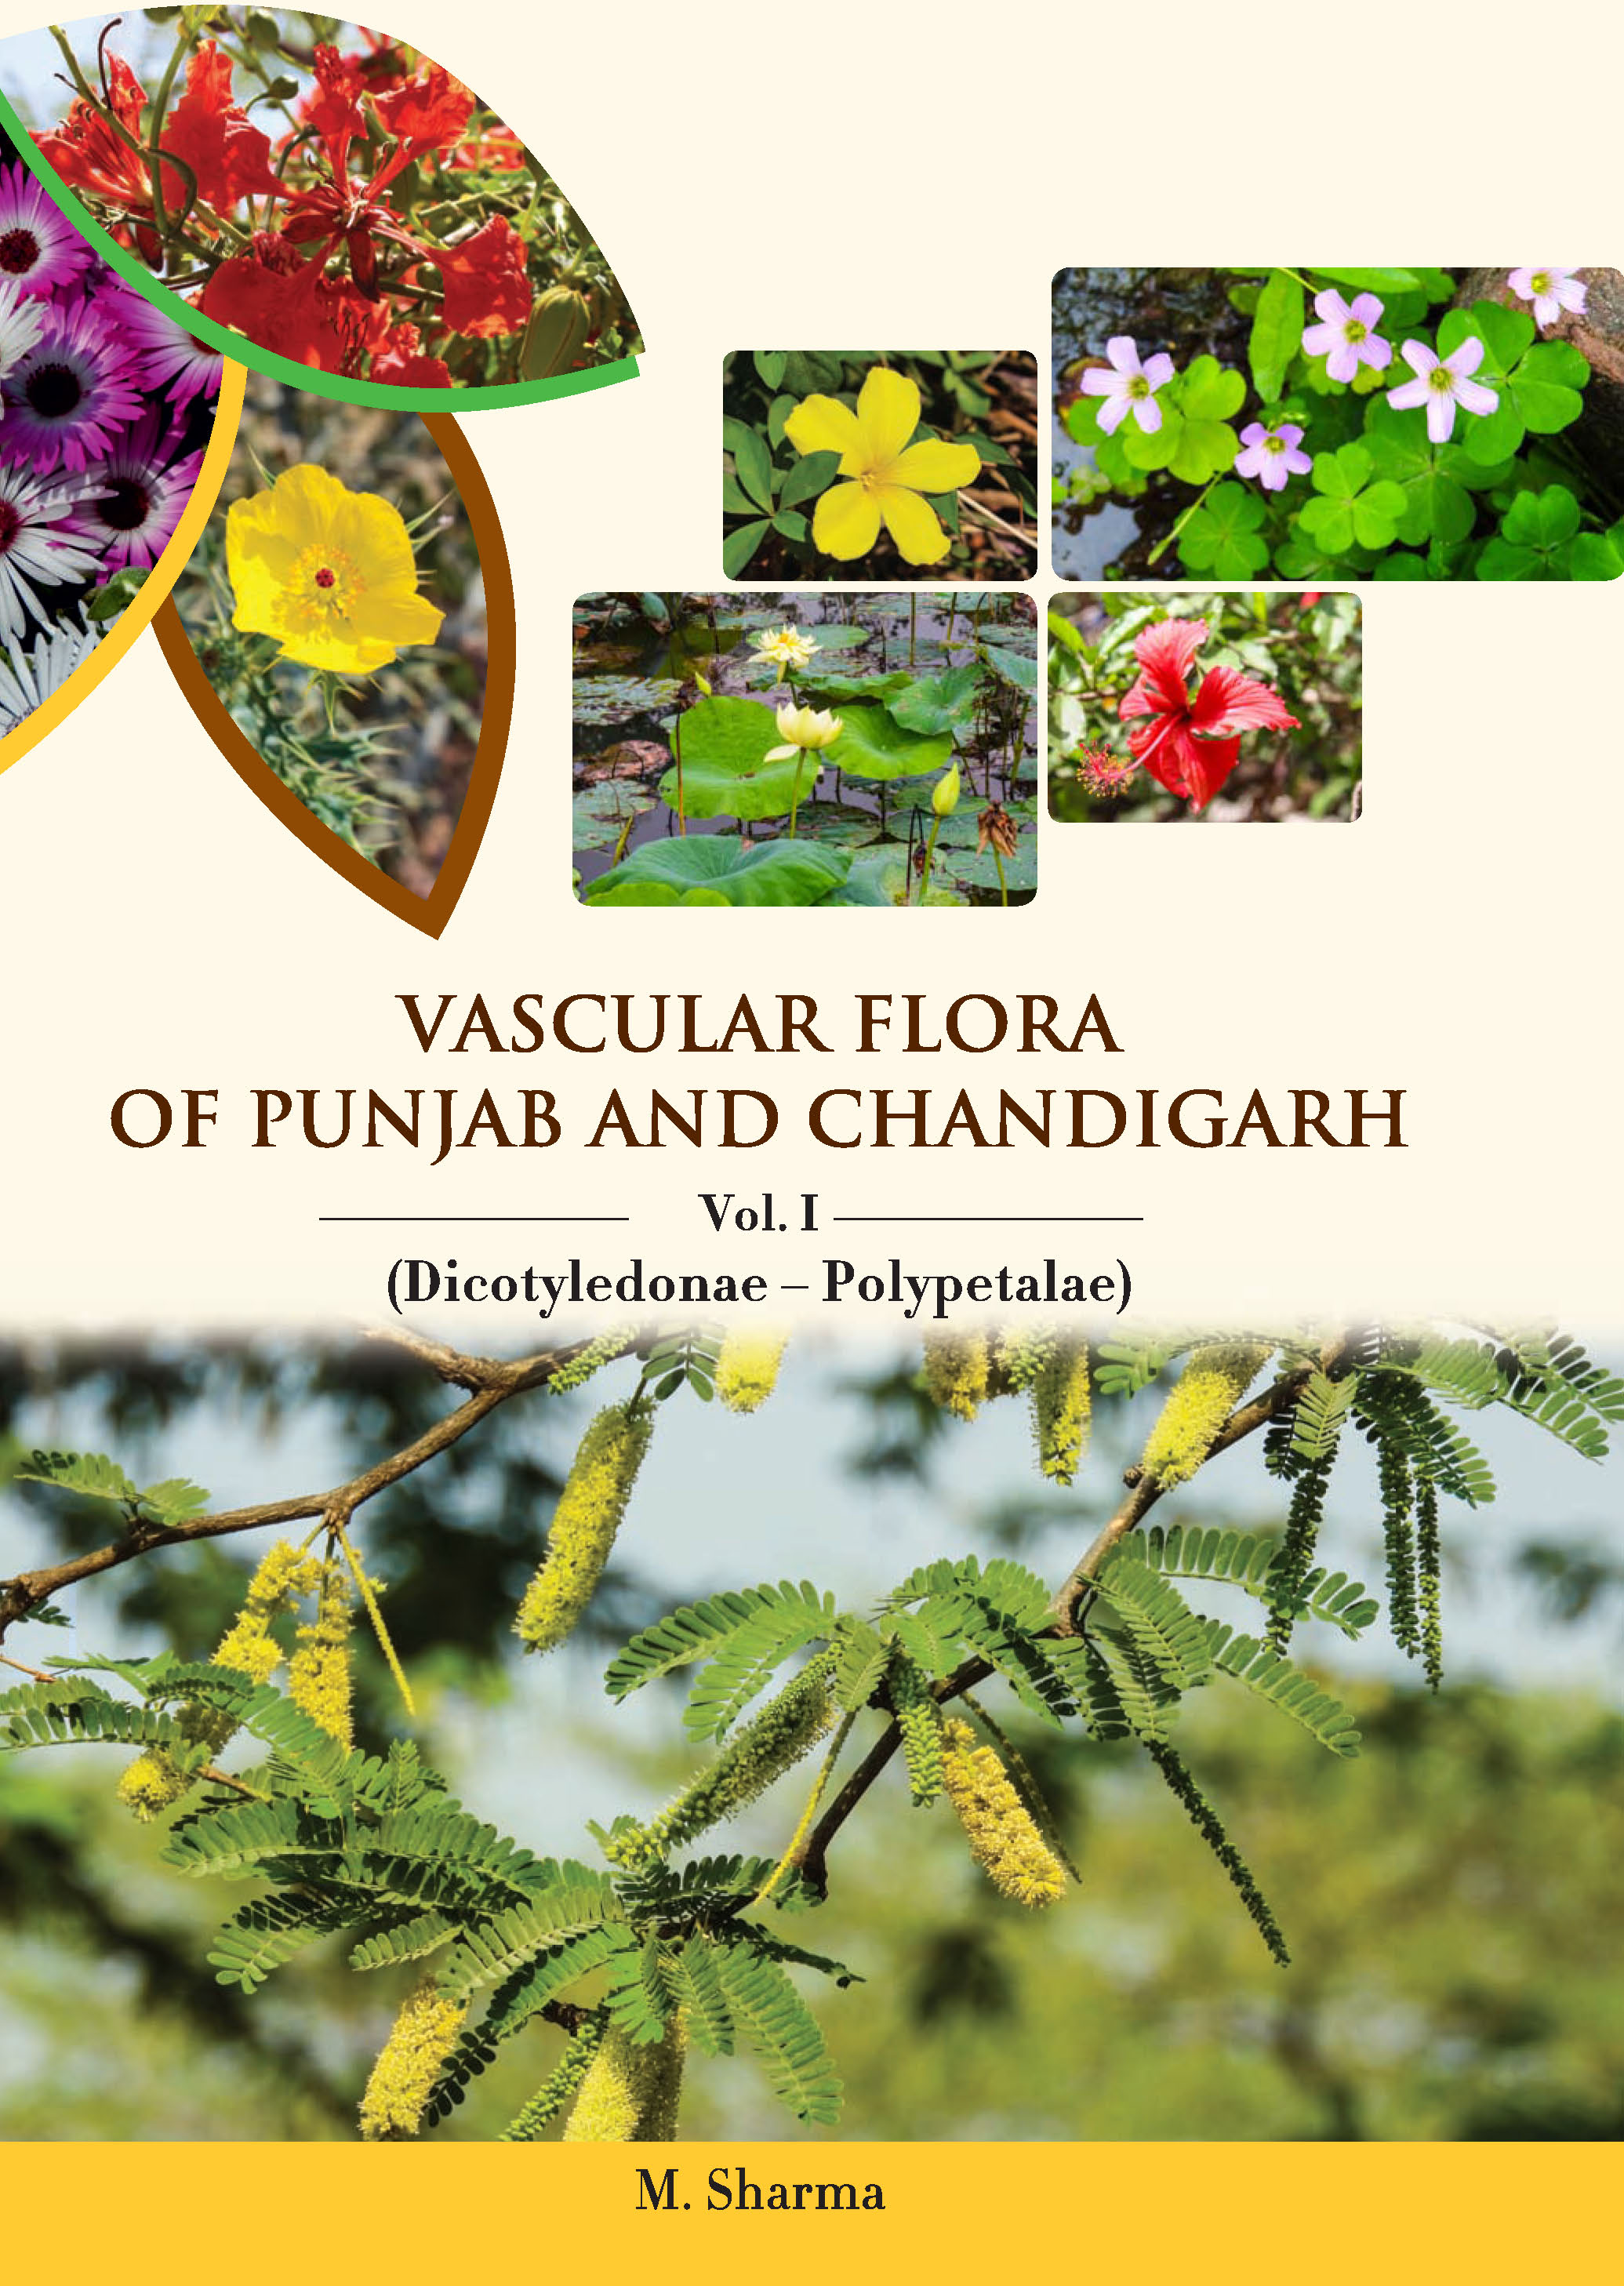 Vascular Flora of Punjaband Chandigarh Volume 1.jpg